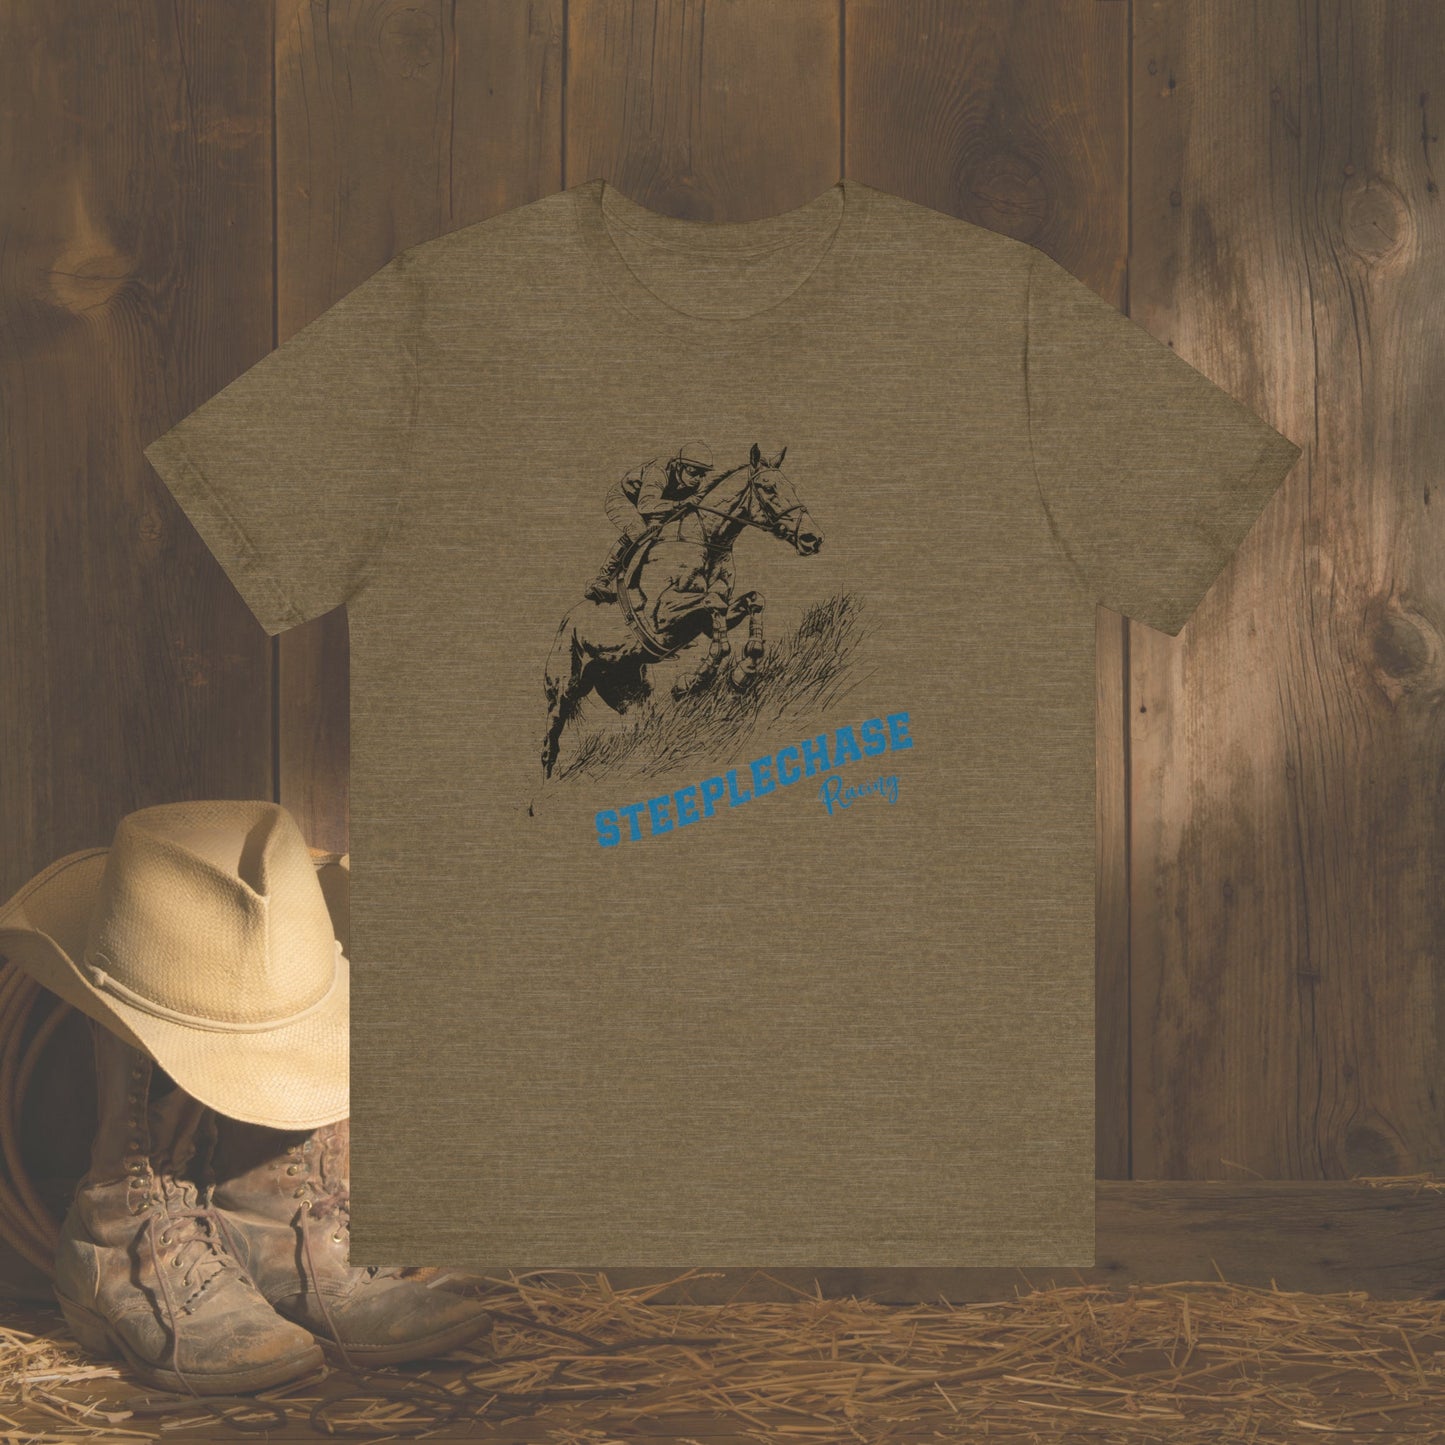 Steeplechase Horse Racing T-shirt, Pen and Ink Horse Art, Horse Lover - FlooredByArt